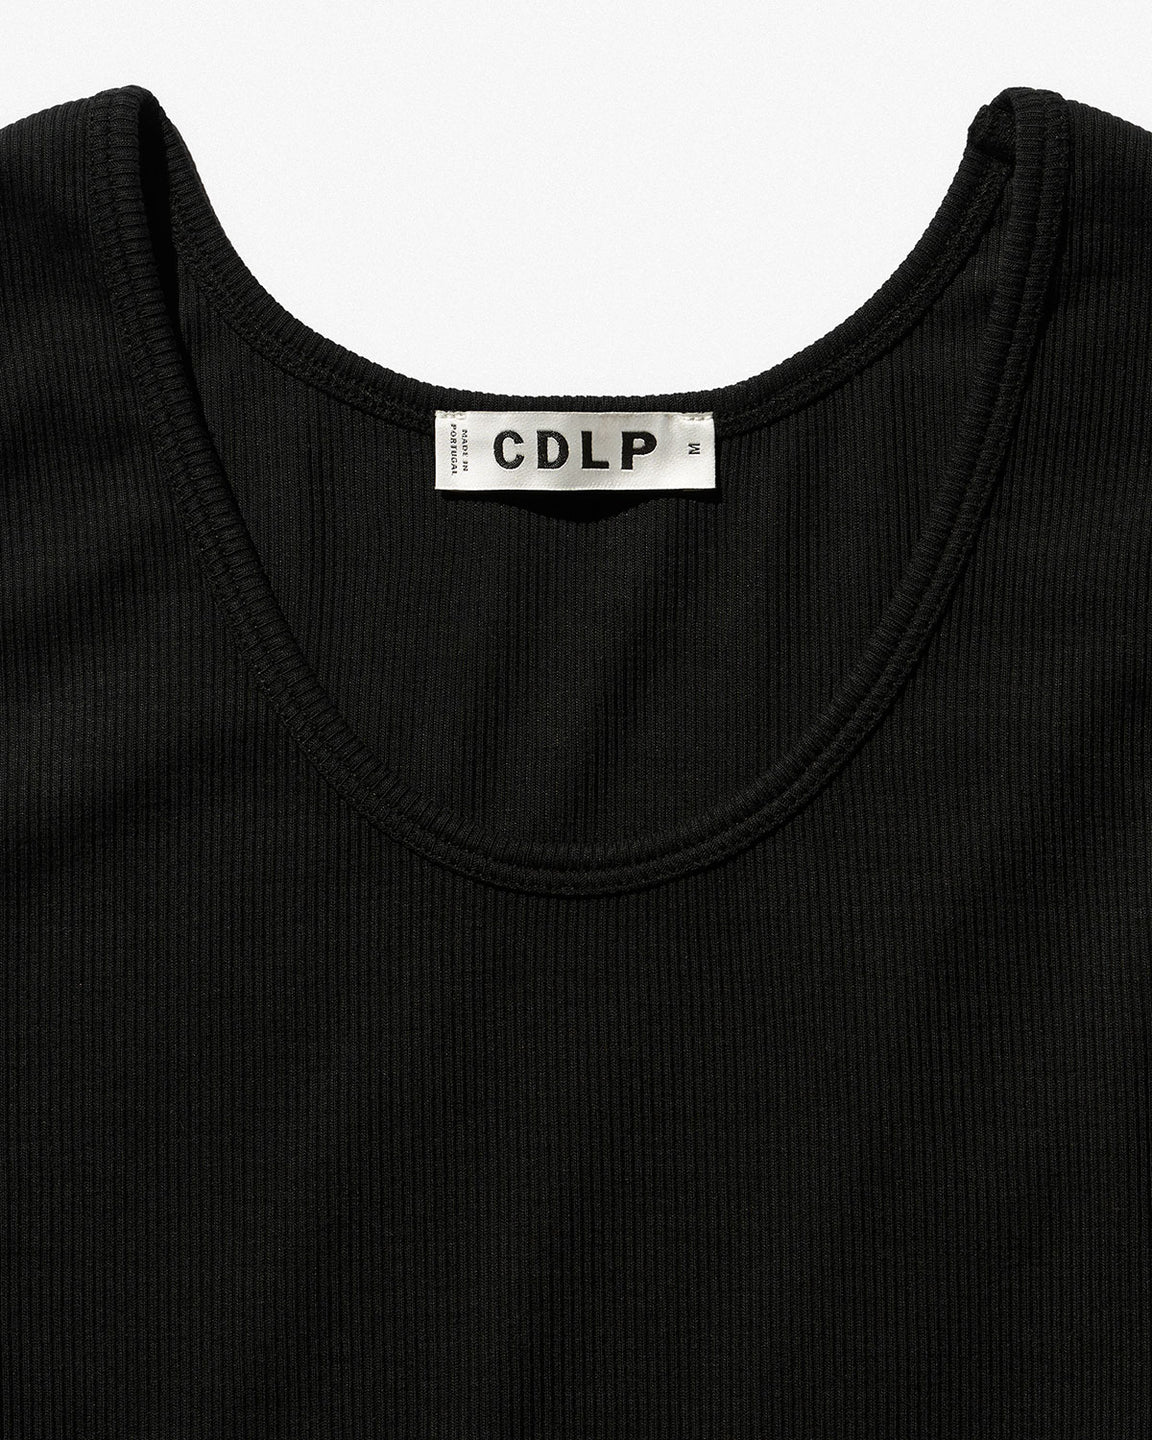 CDLP Rib Tank Top in Black